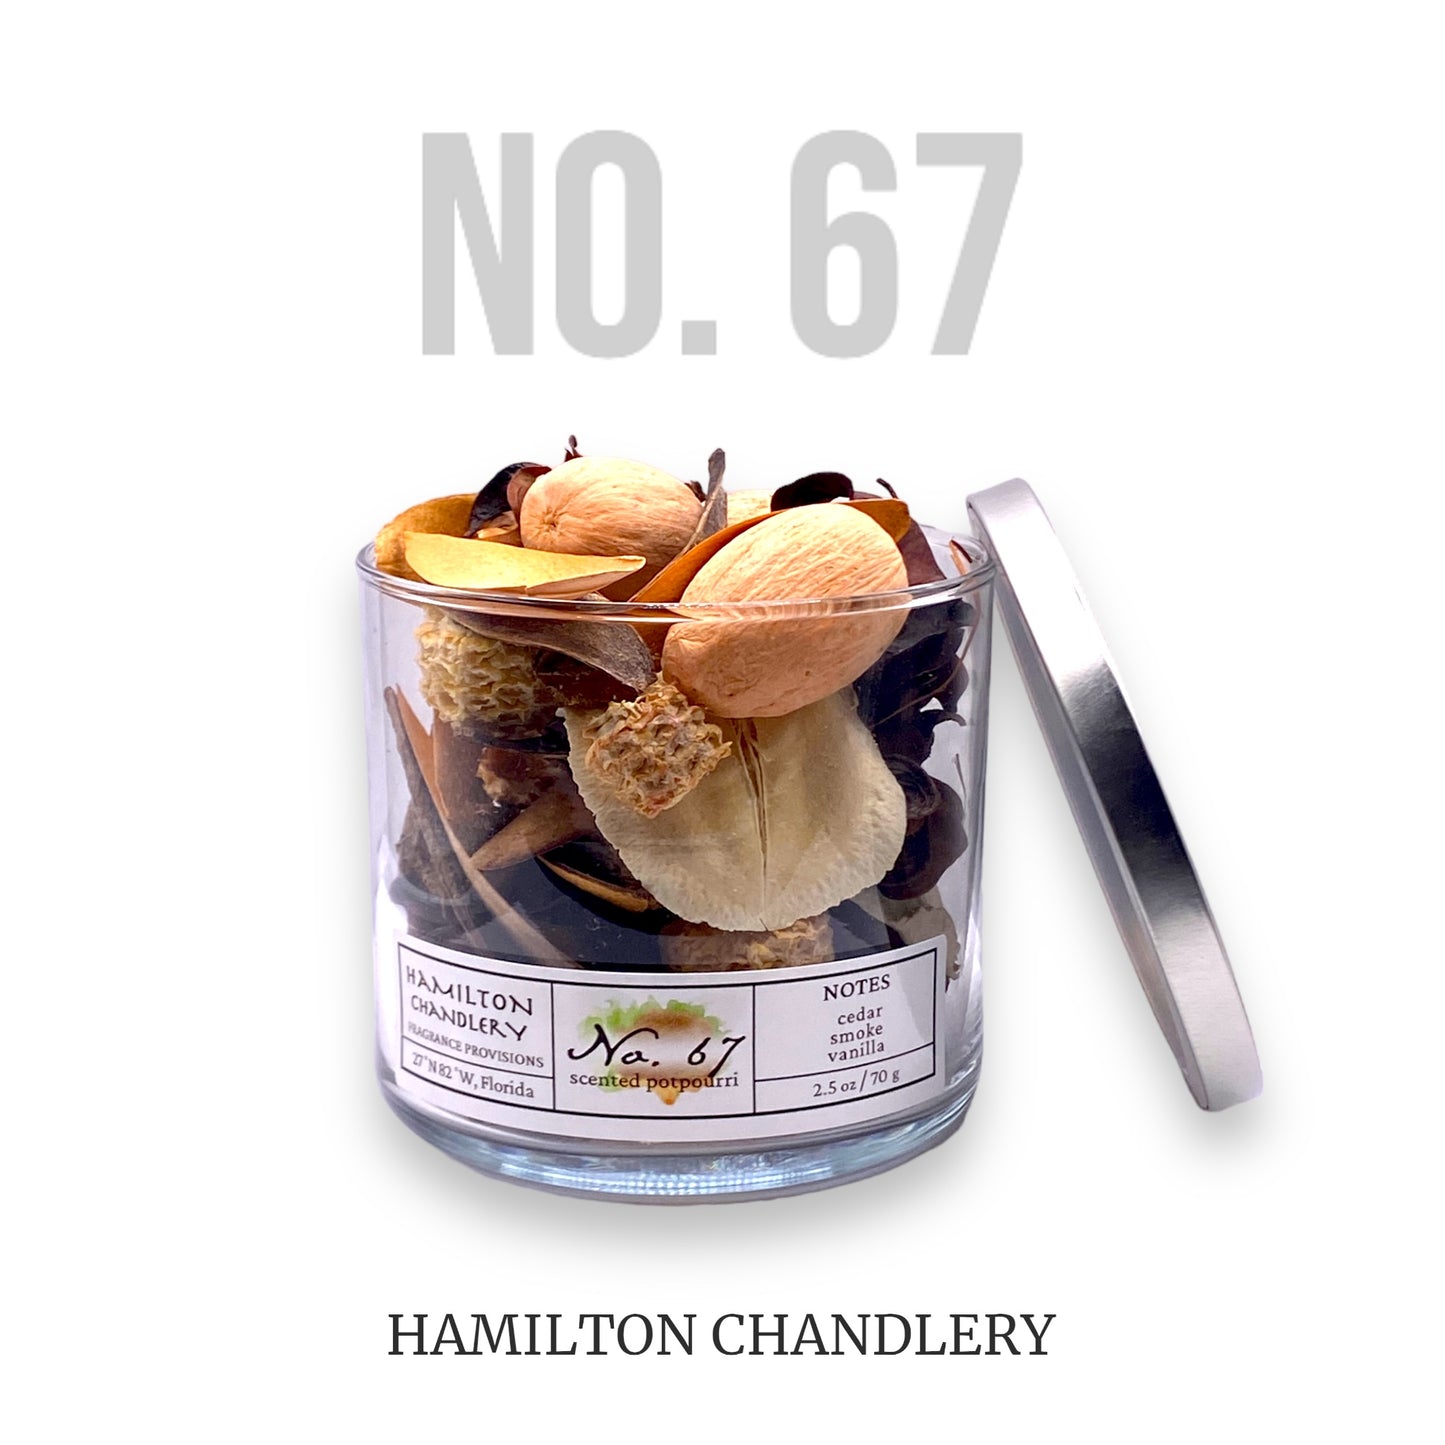 Fragrance No. 67 Potpourri Jar with White Background | Hamilton Chandlery